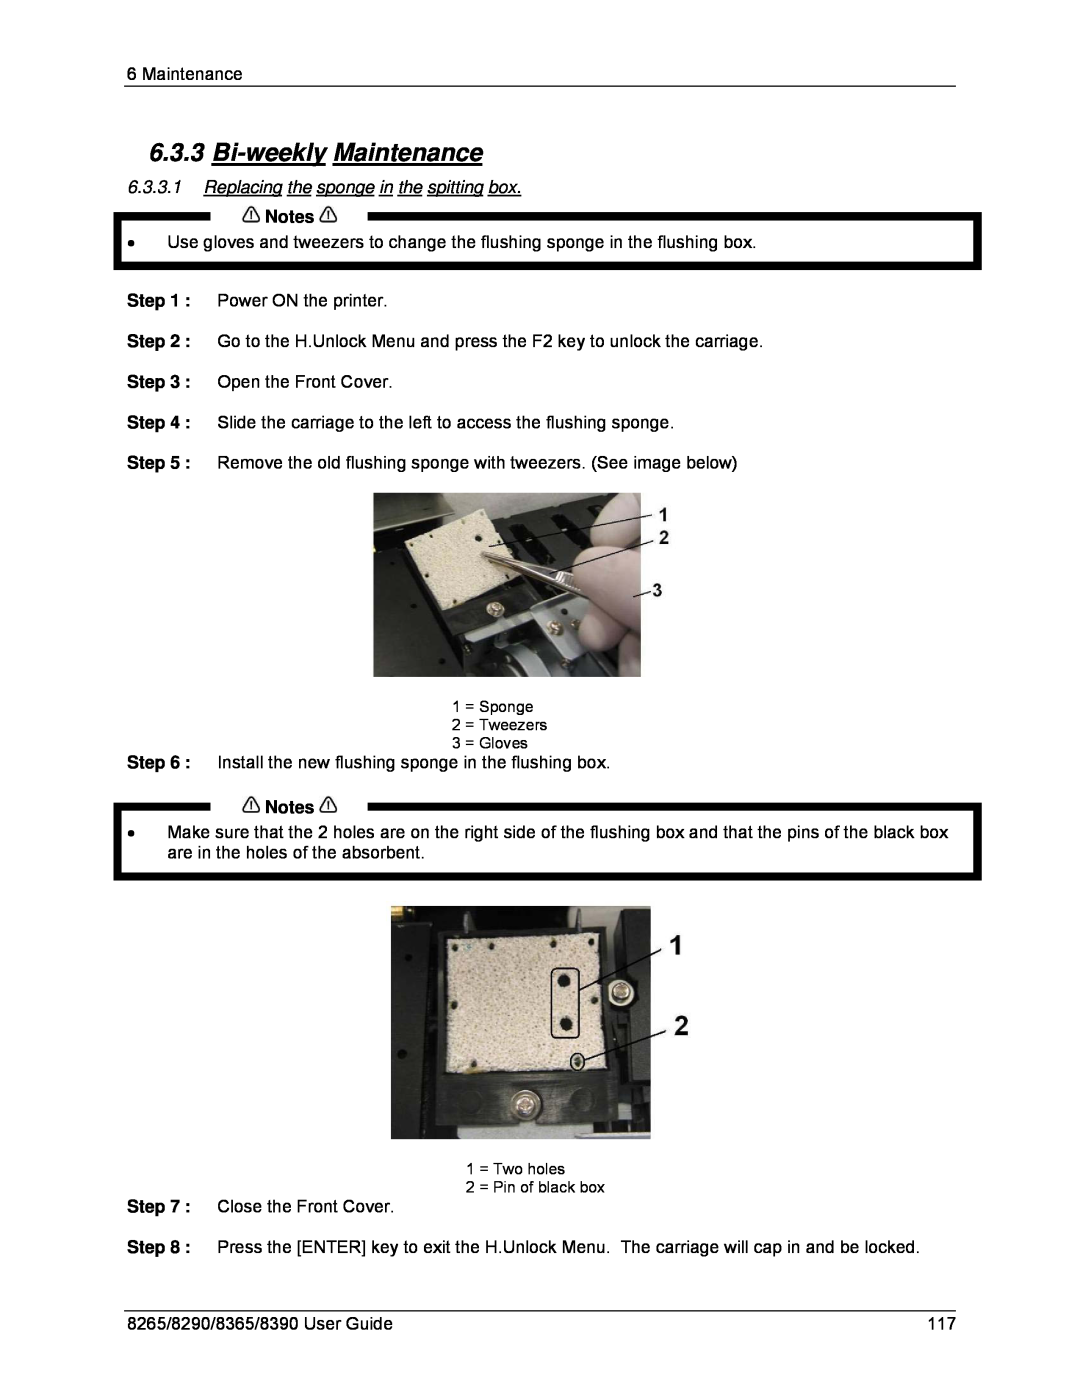 Xerox 8265, 8290, 8390, 8365 manual Bi-weekly Maintenance, Replacing the sponge in the spitting box 